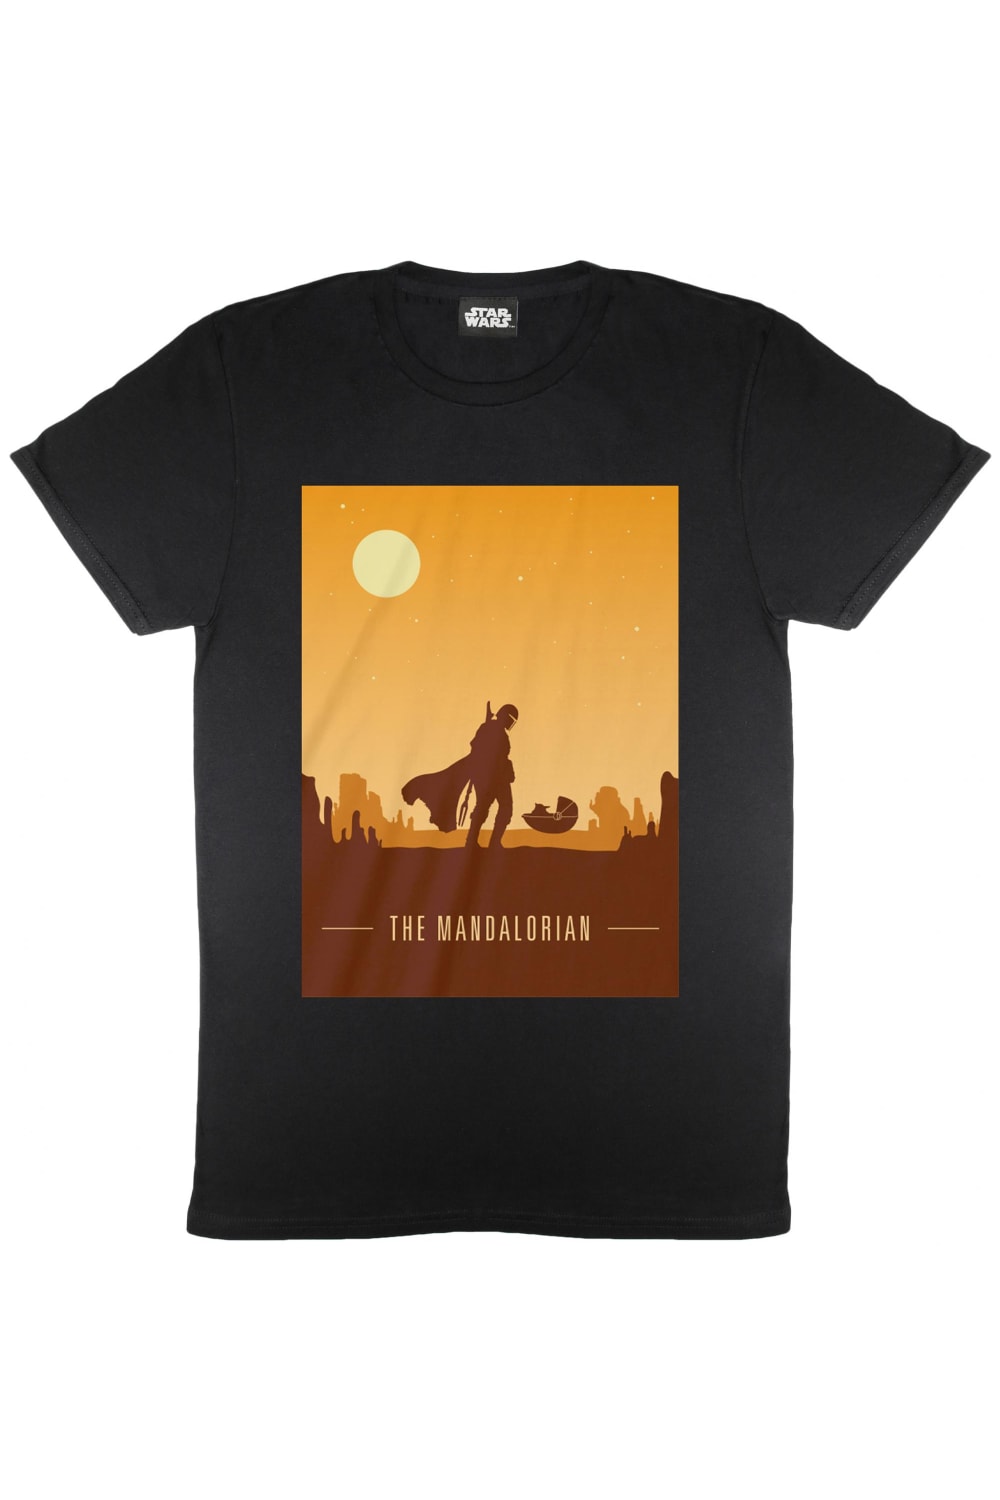 Star Wars: The Mandalorian Mens Retro Style Poster T-Shirt (Black)